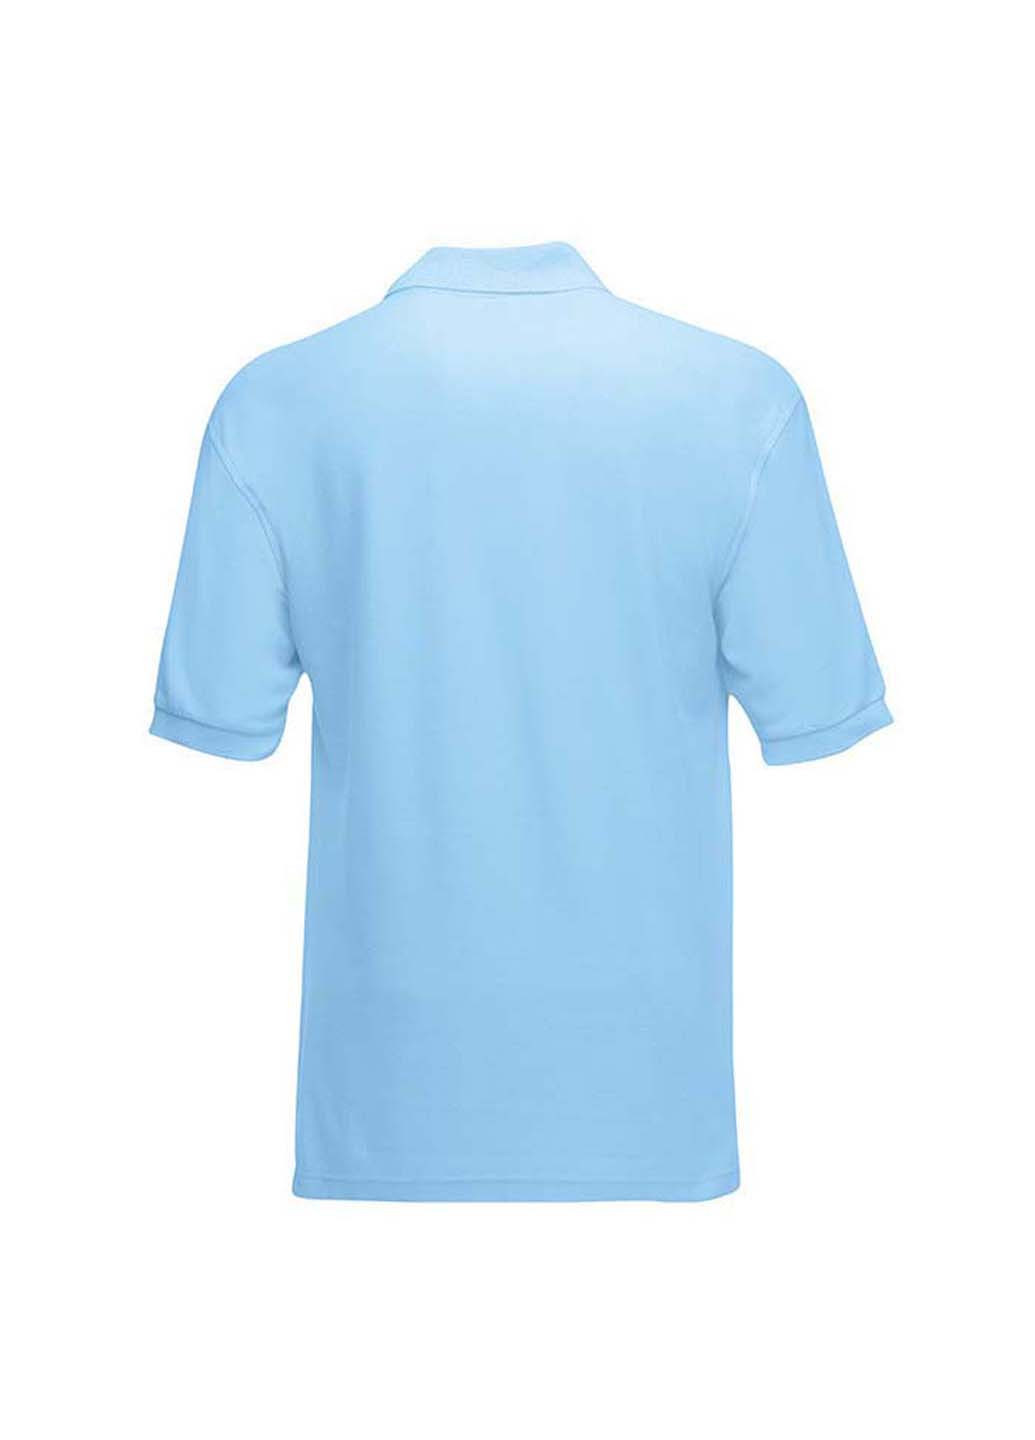 Светло-голубой футболка-поло для мужчин Fruit of the Loom